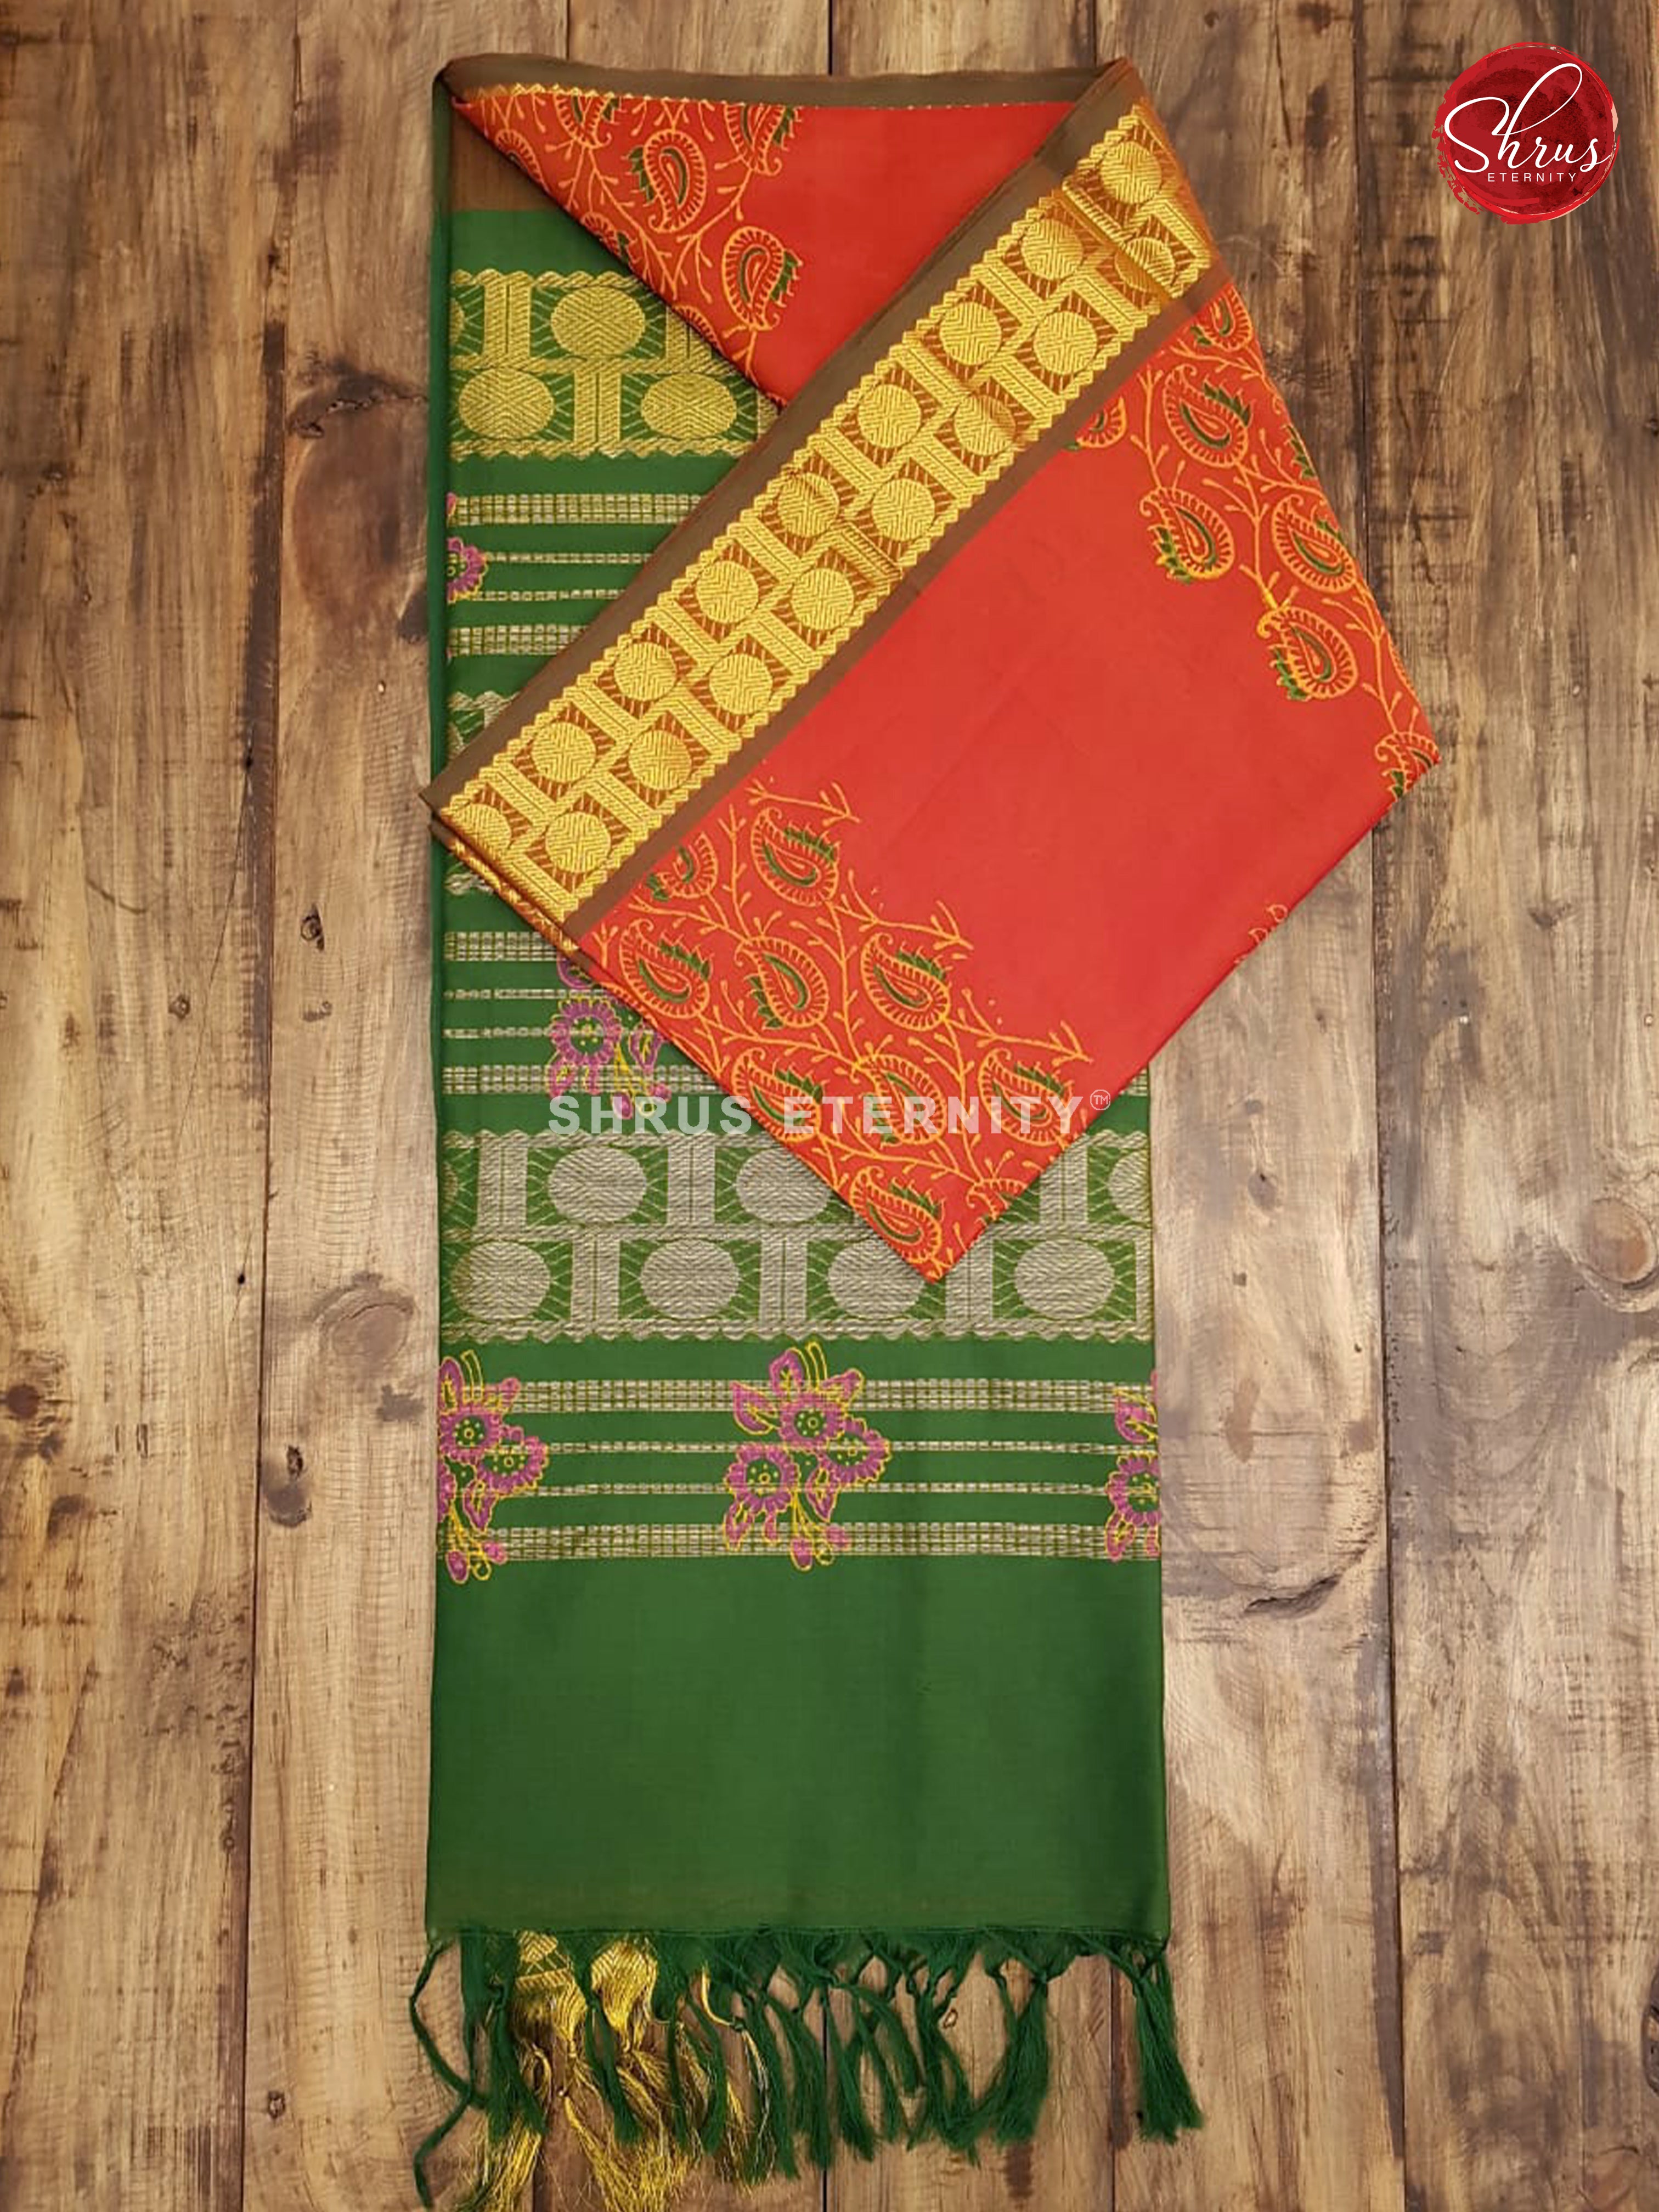 Red & Green - Semi Silk - Shop on ShrusEternity.com